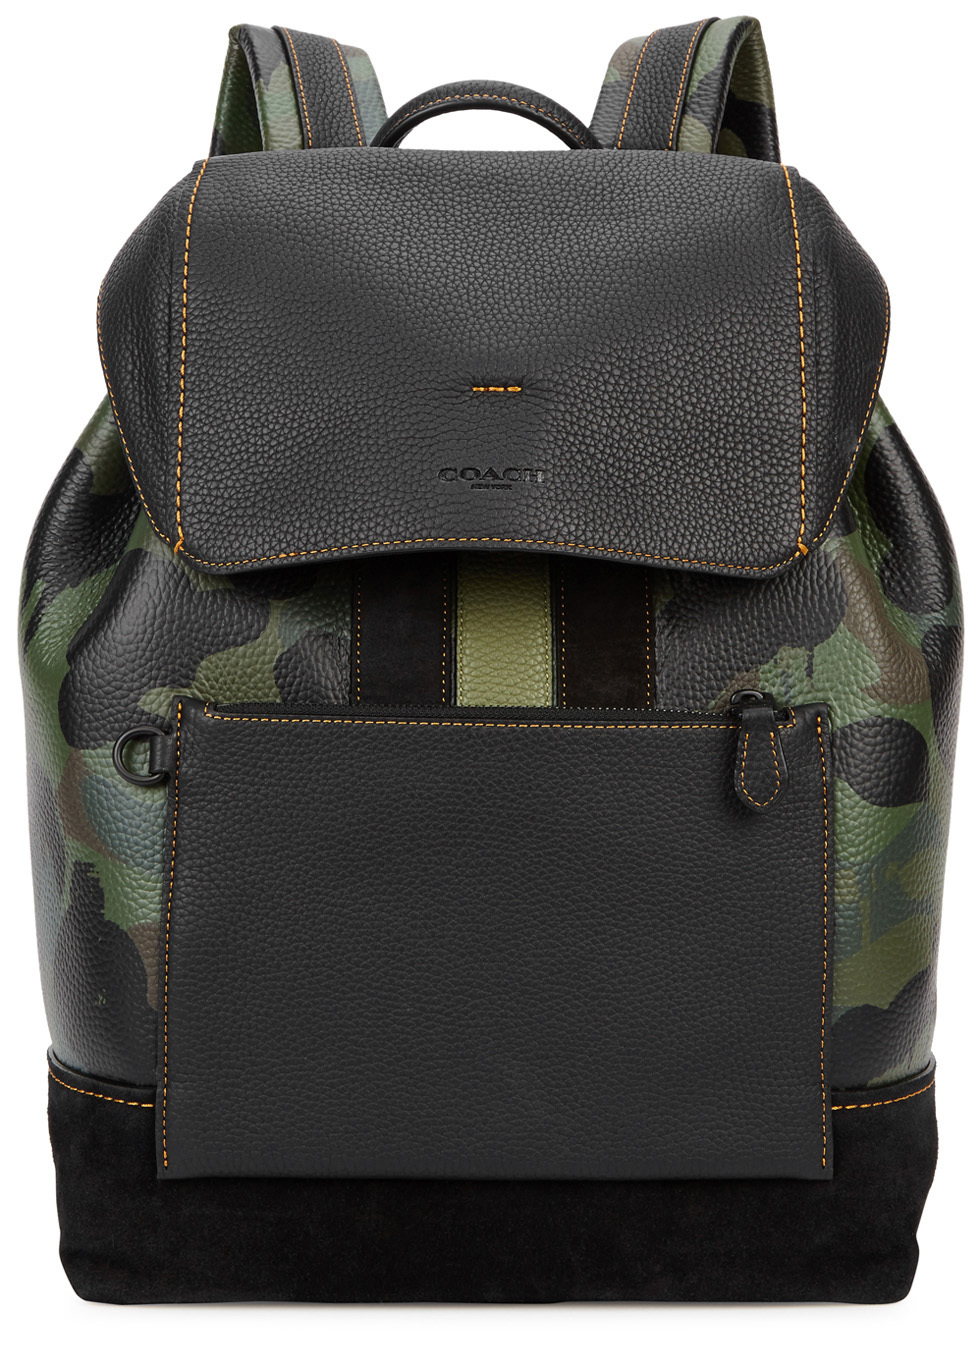 Coach Camouflage-print leather backpack - Harvey Nichols